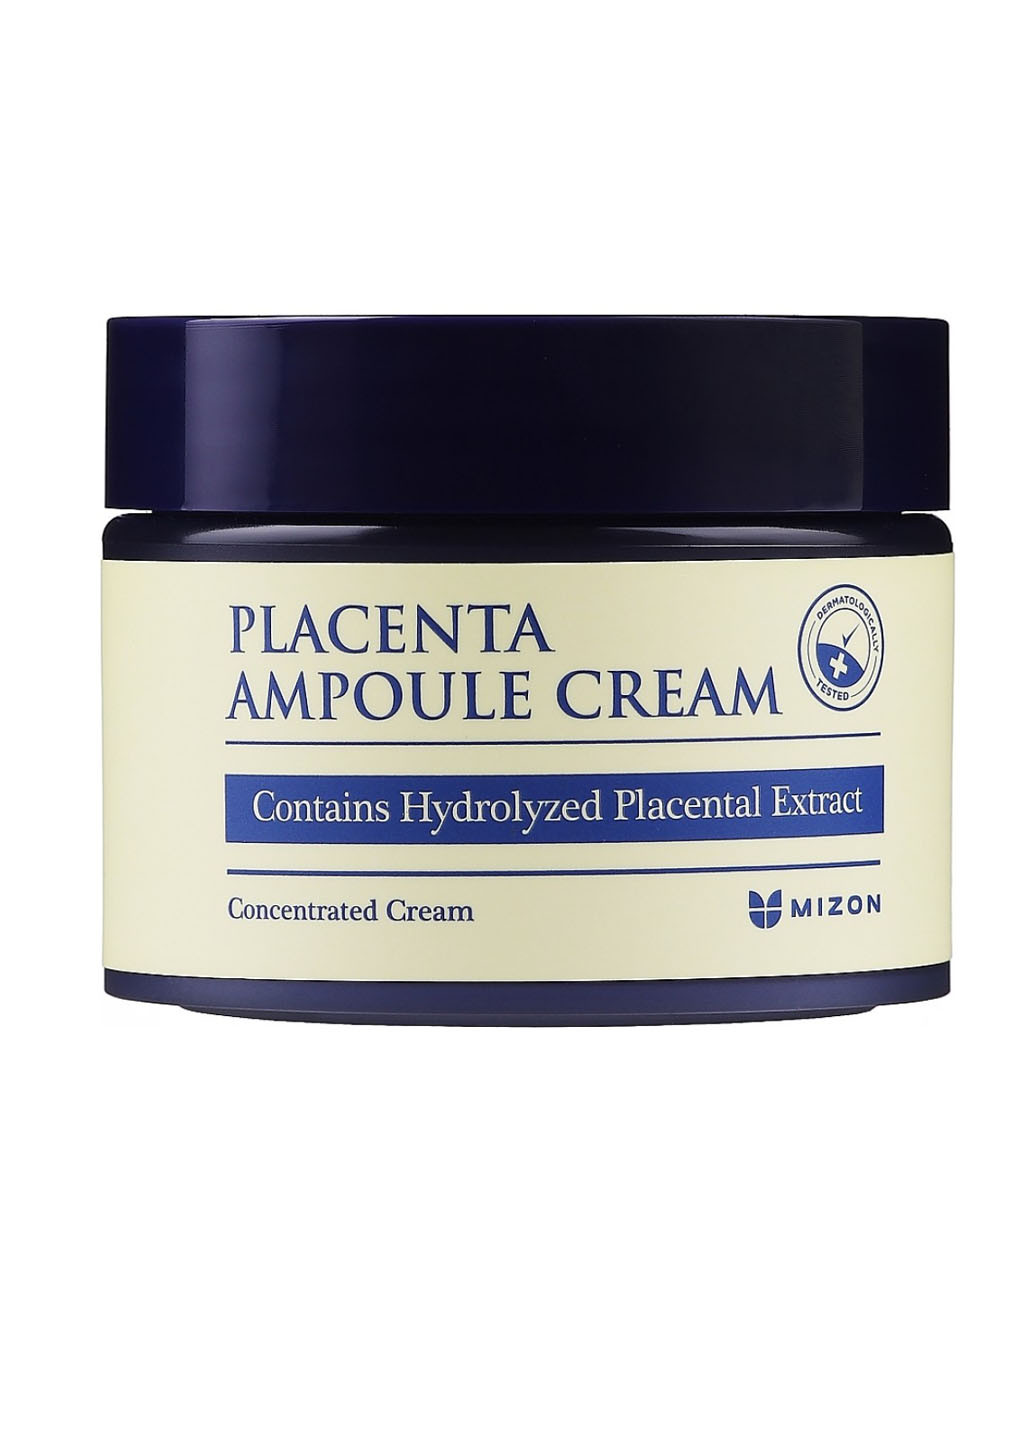 Плацентарный крем для лица Placenta Ampoule Cream, 50мл Mizon 8809663752422 (257480354)